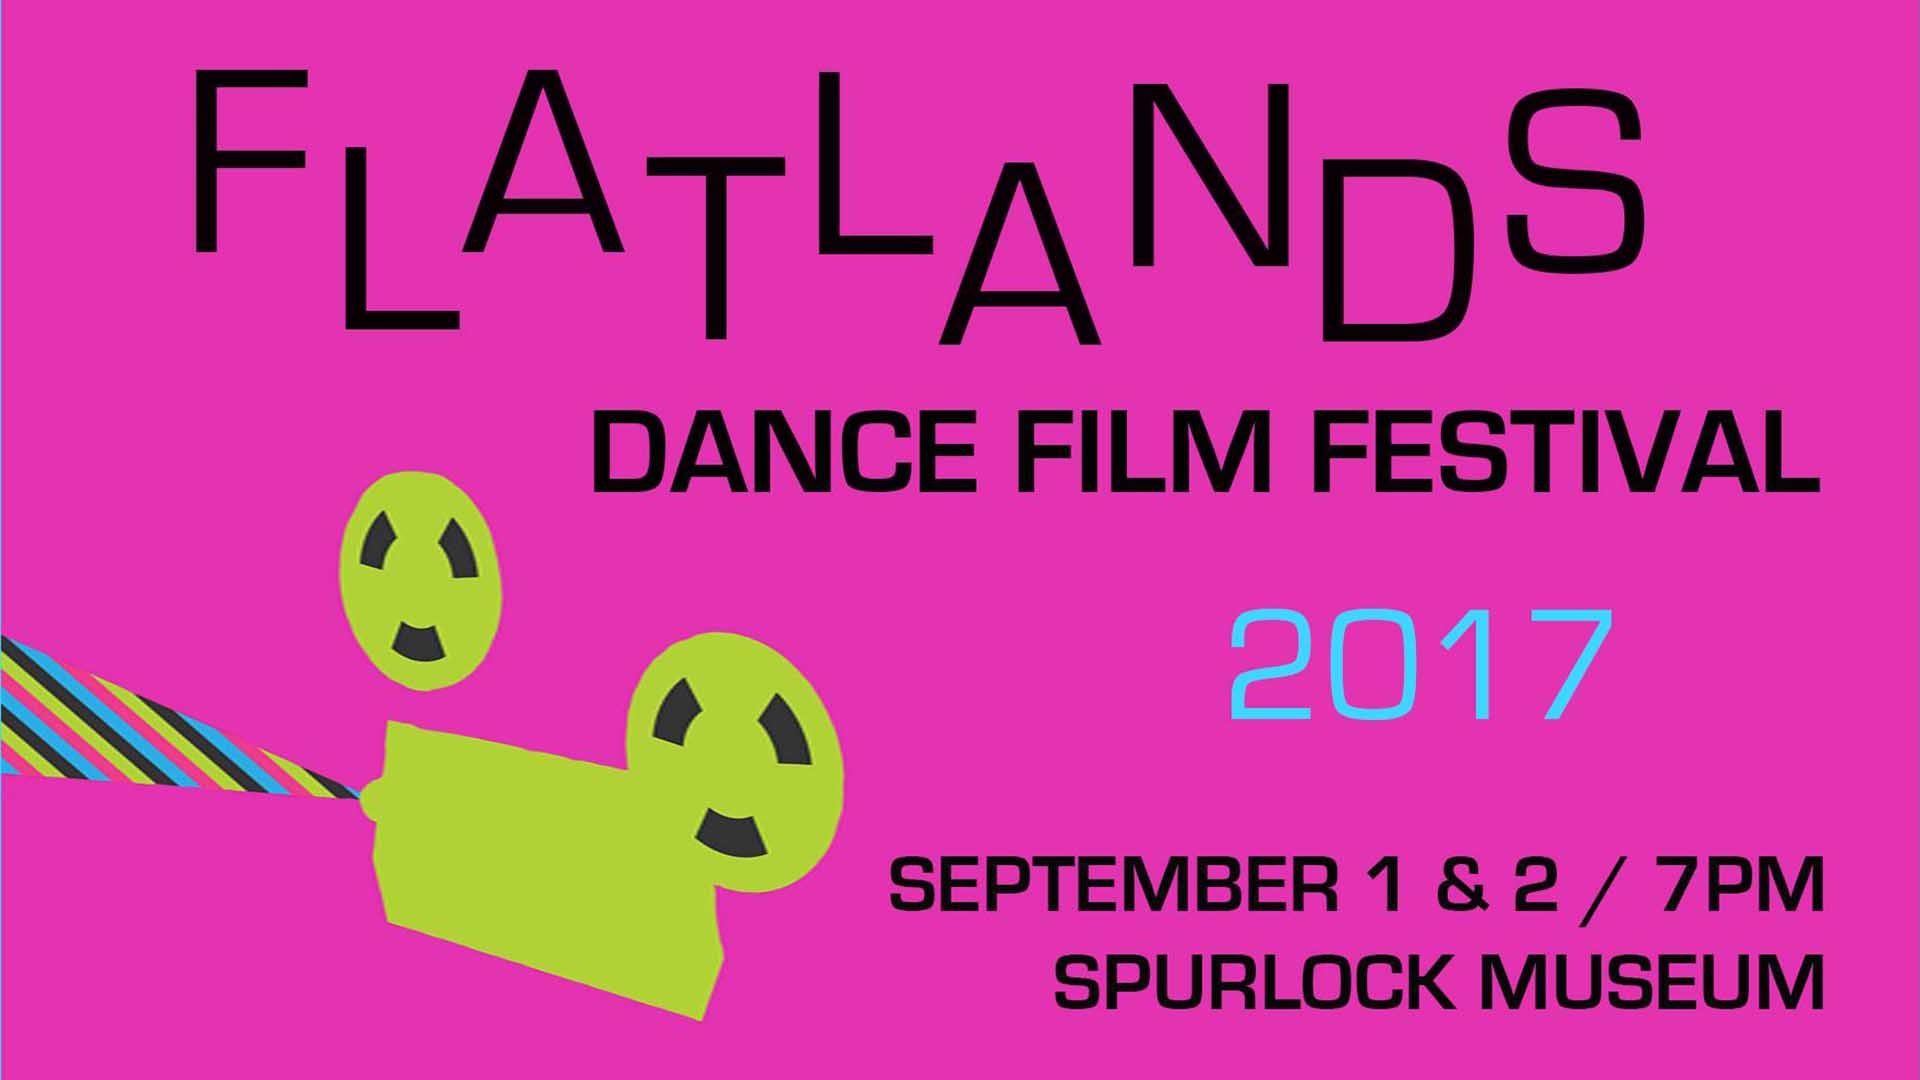 Flatlands Dance Film Festival 2017, September 1 and 2, 7pm Spurlock Museum